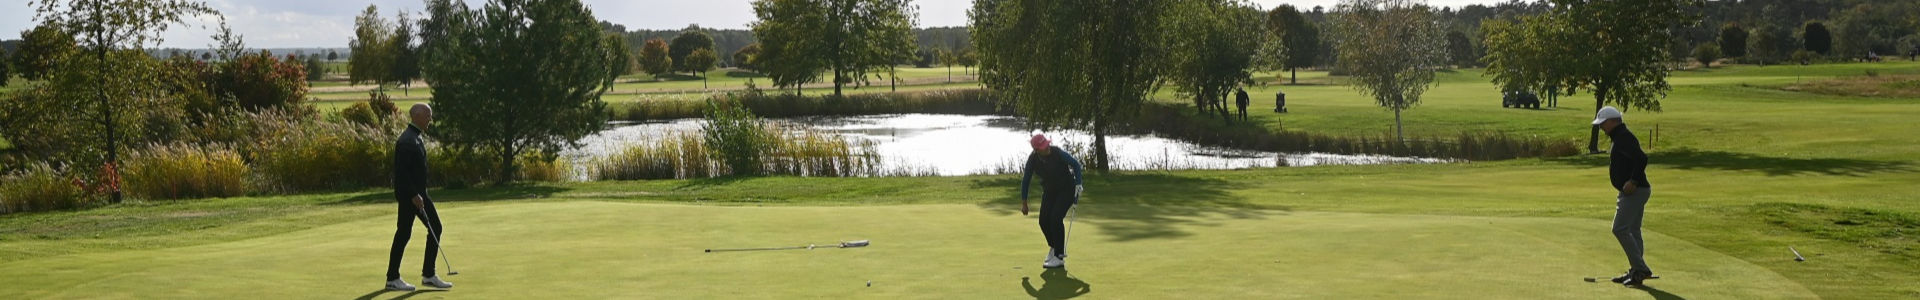 Golfplatz Dübener Heide :: Golfclub Leipzig e.V.